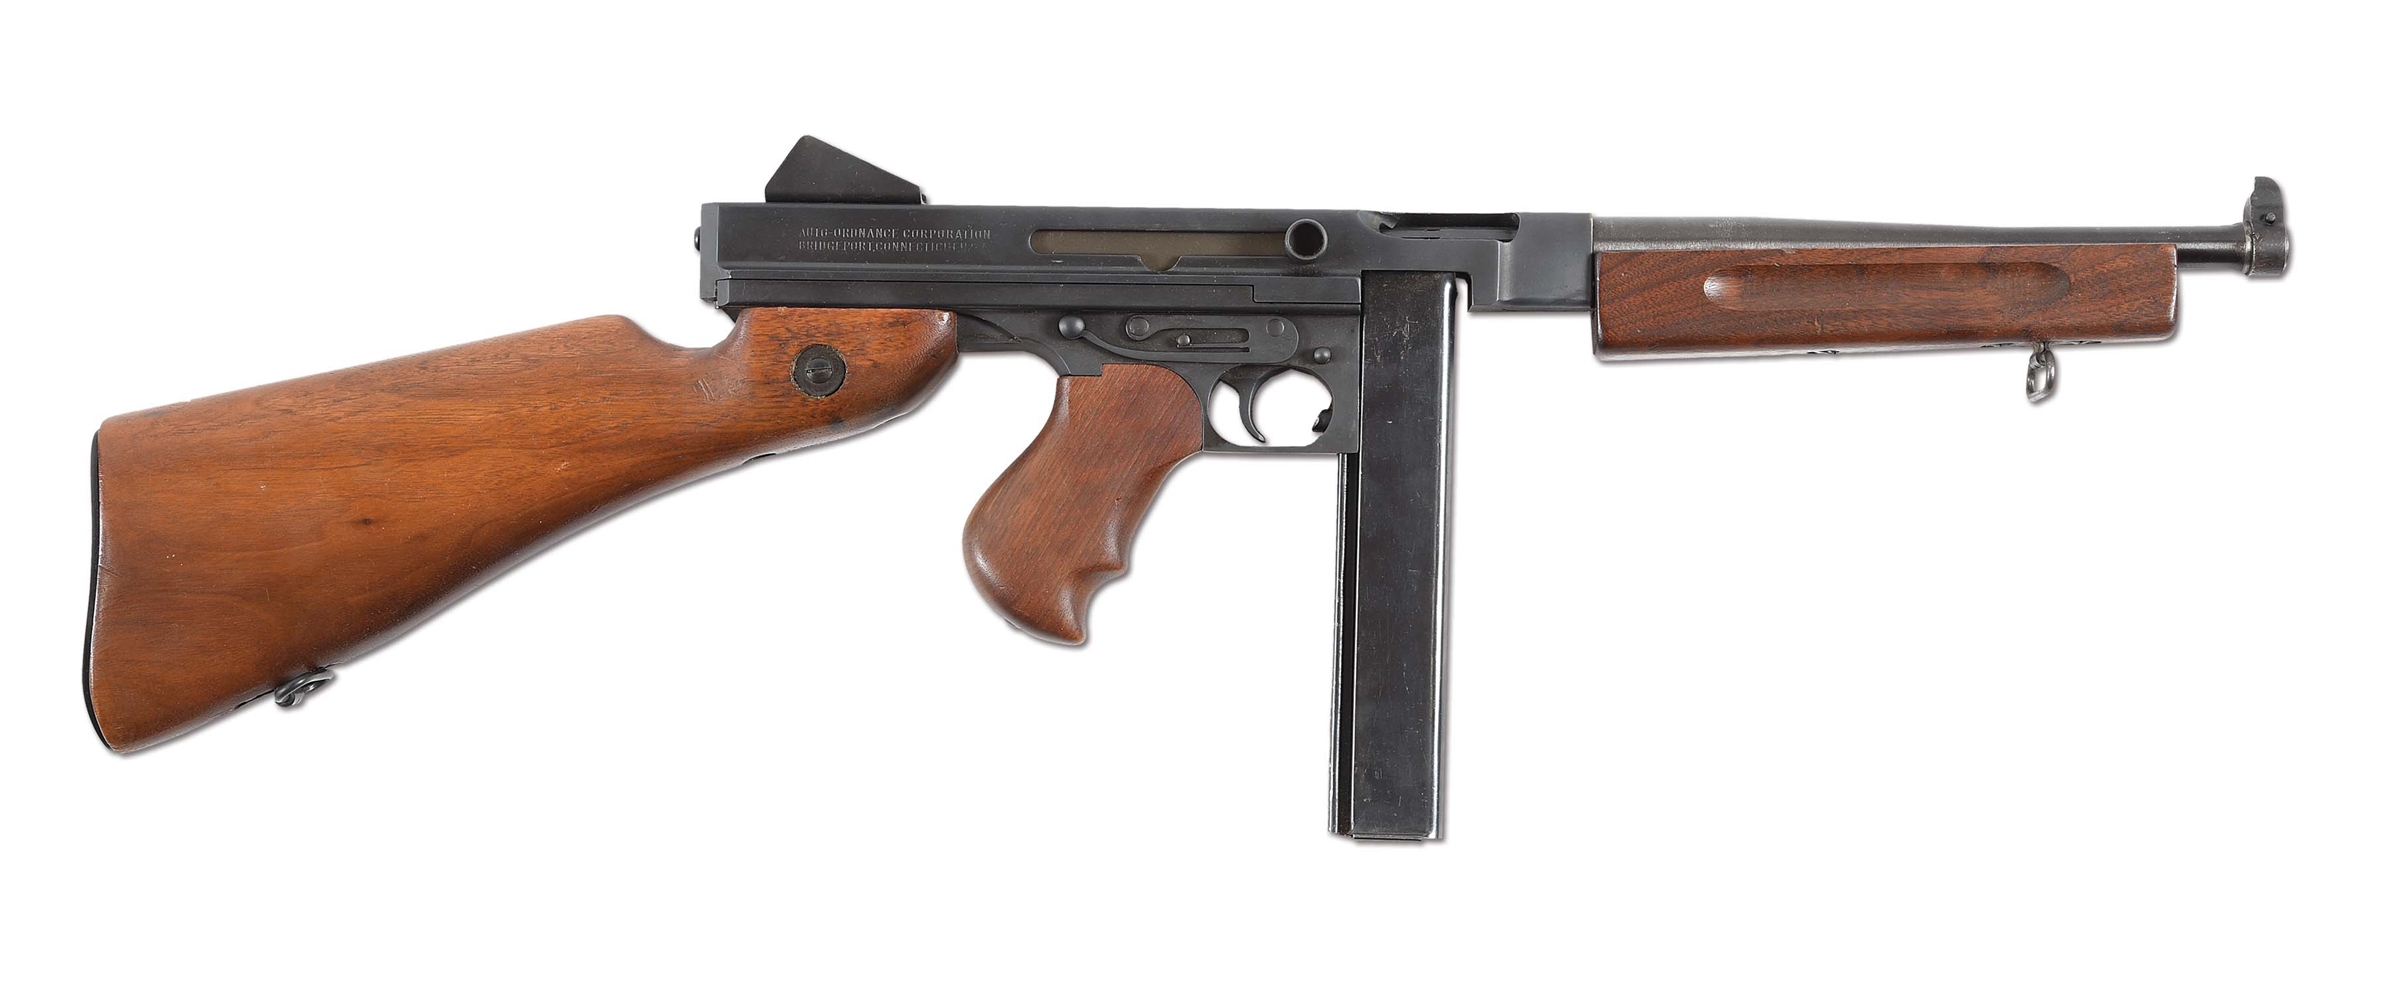 (N) SCARCE M1 MODEL THOMPSON MACHINE GUN FROM WORLD WAR II ERA (CURIO AND RELIC).